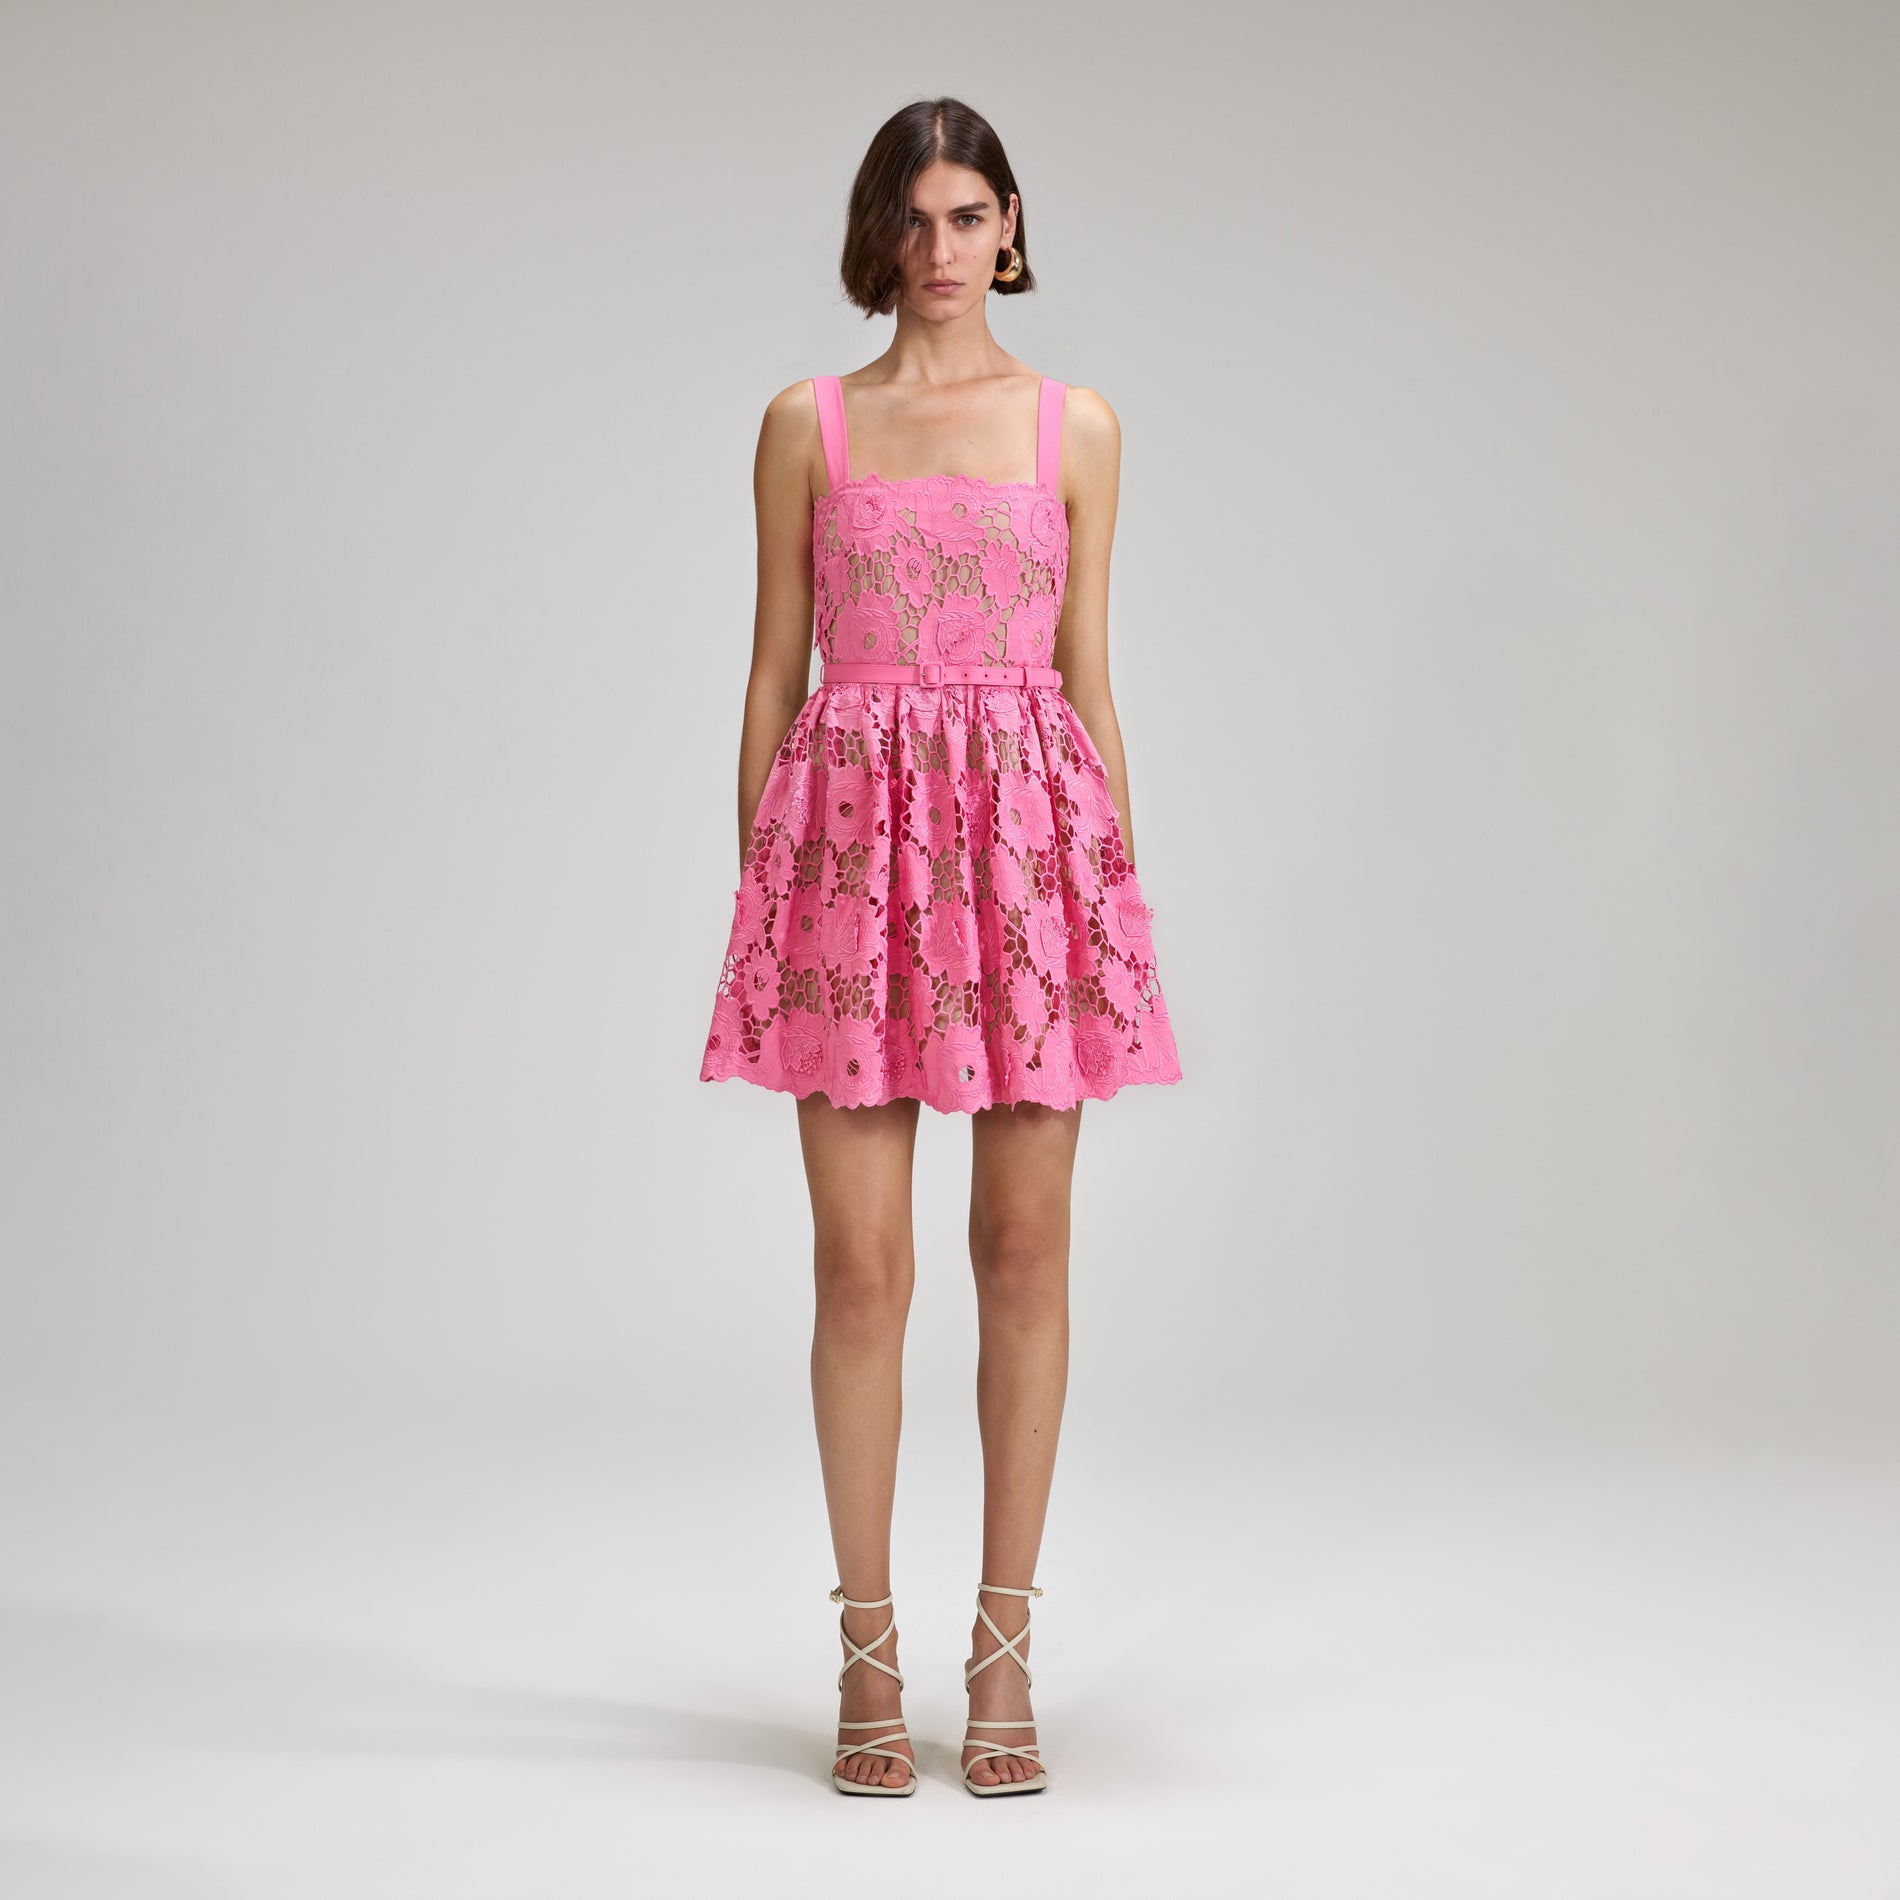 A woman wearing the Pink 3D Cotton Lace Mini Dress